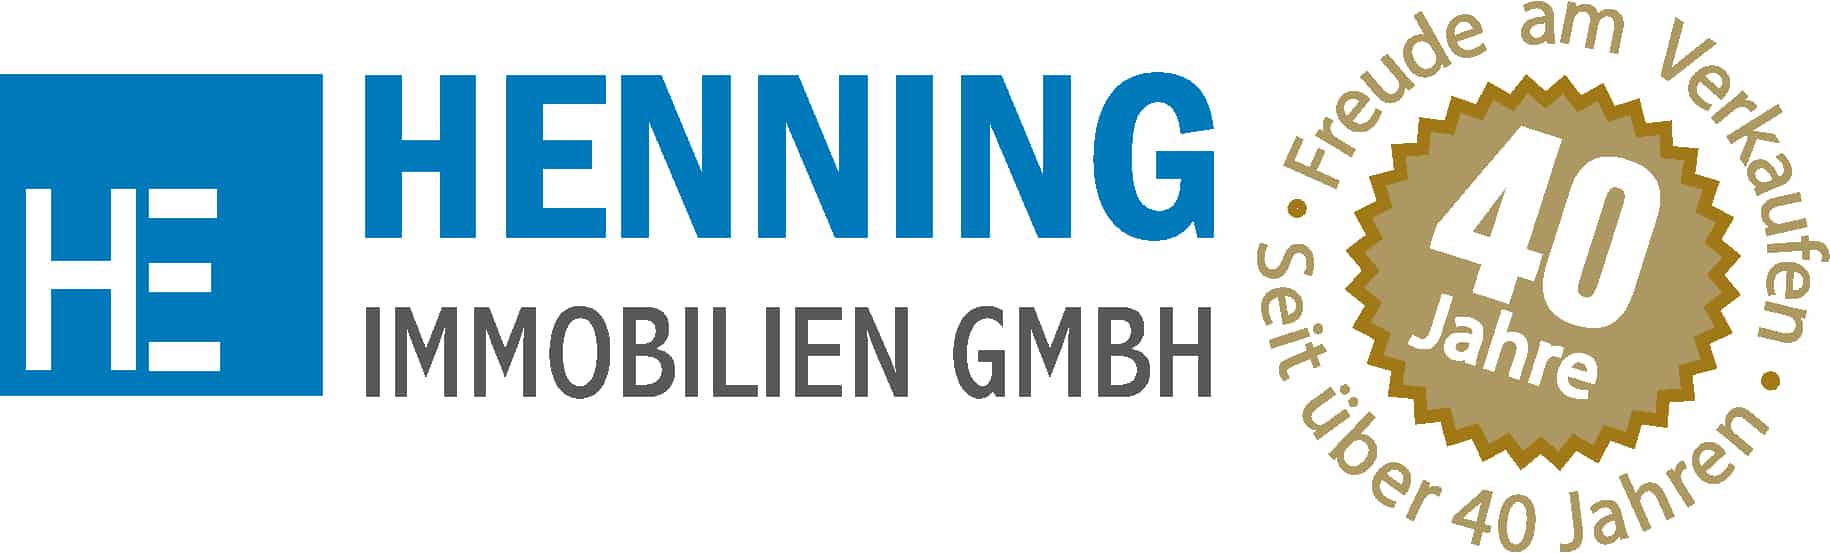 Henning Immobilien GmbH